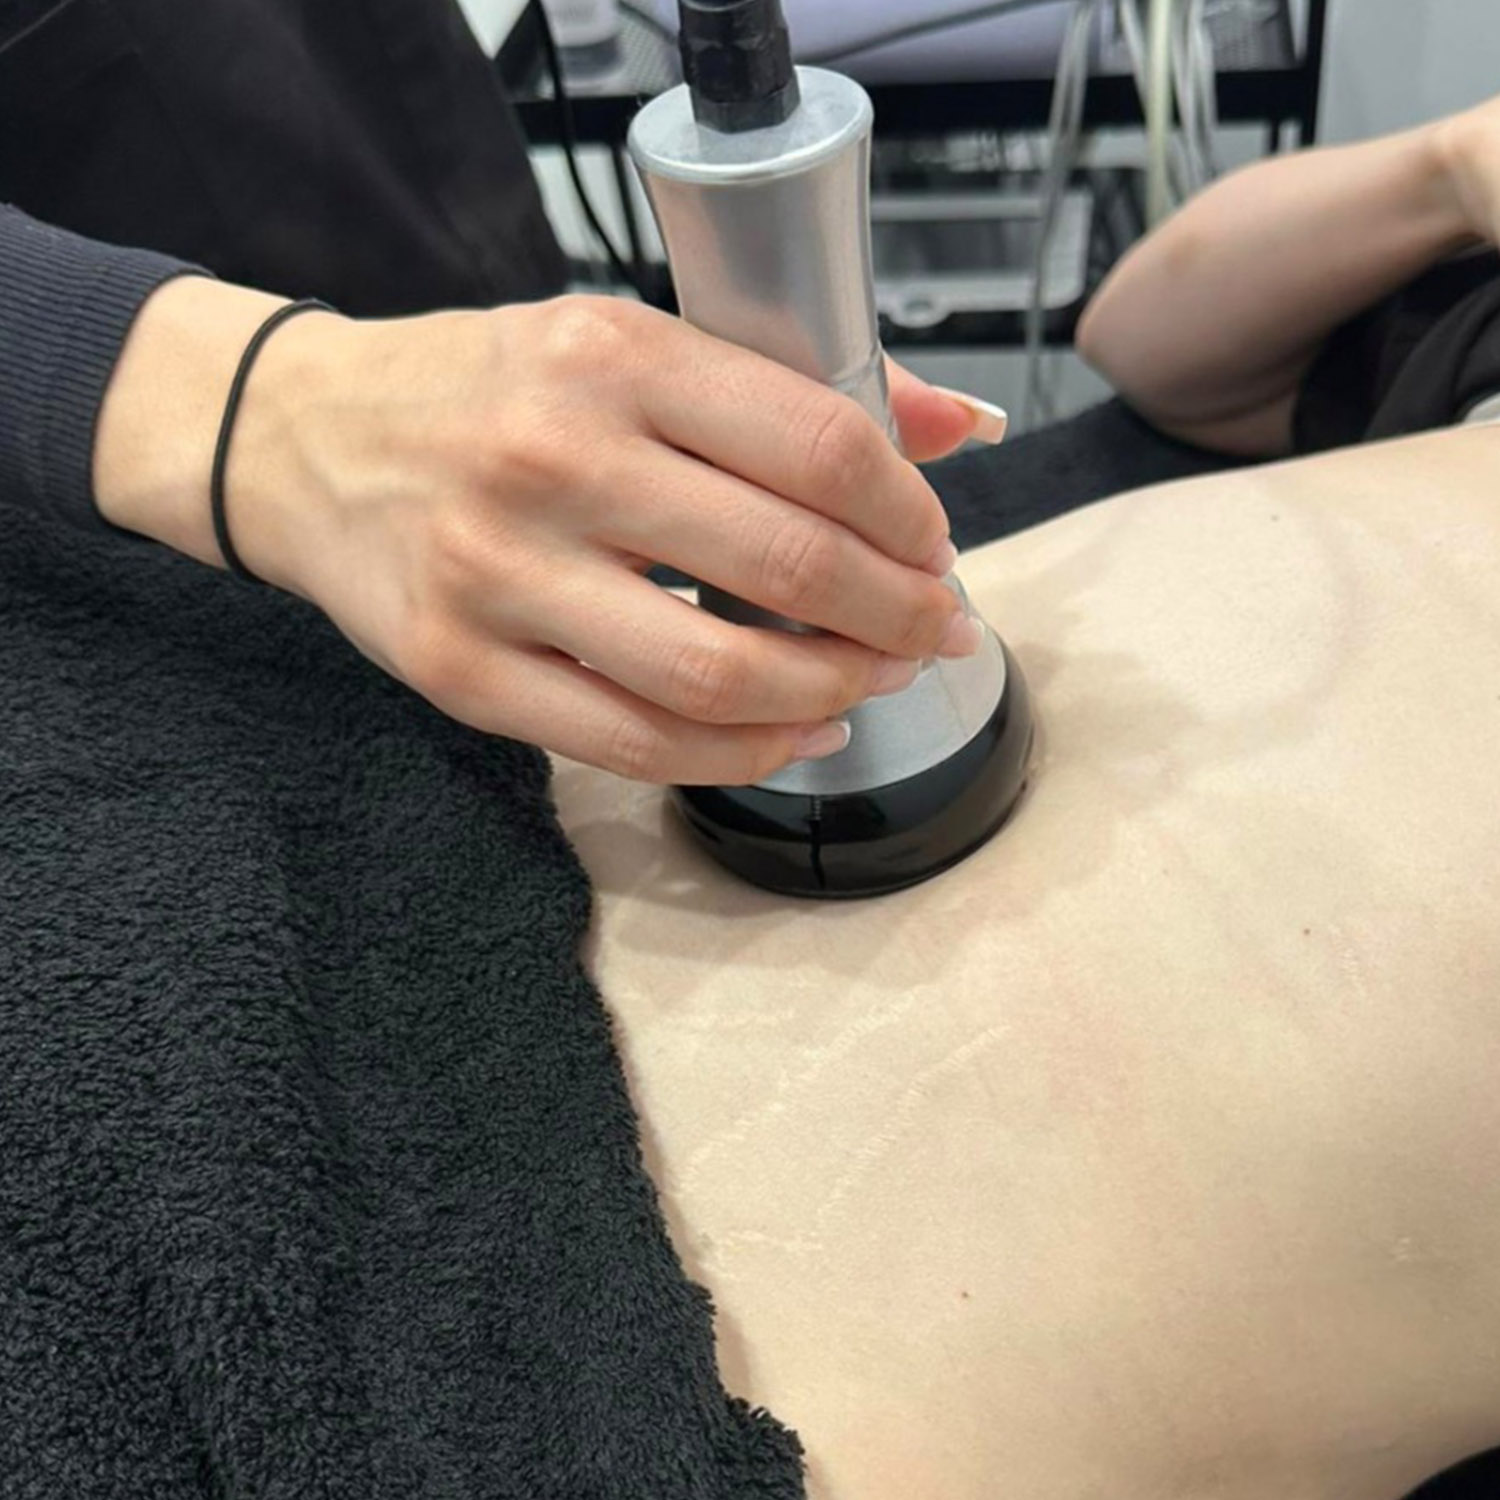 Ultrasound Cavitation Treatment using modern equipment and technique at Rejuvenate Laser & Skin Clinic